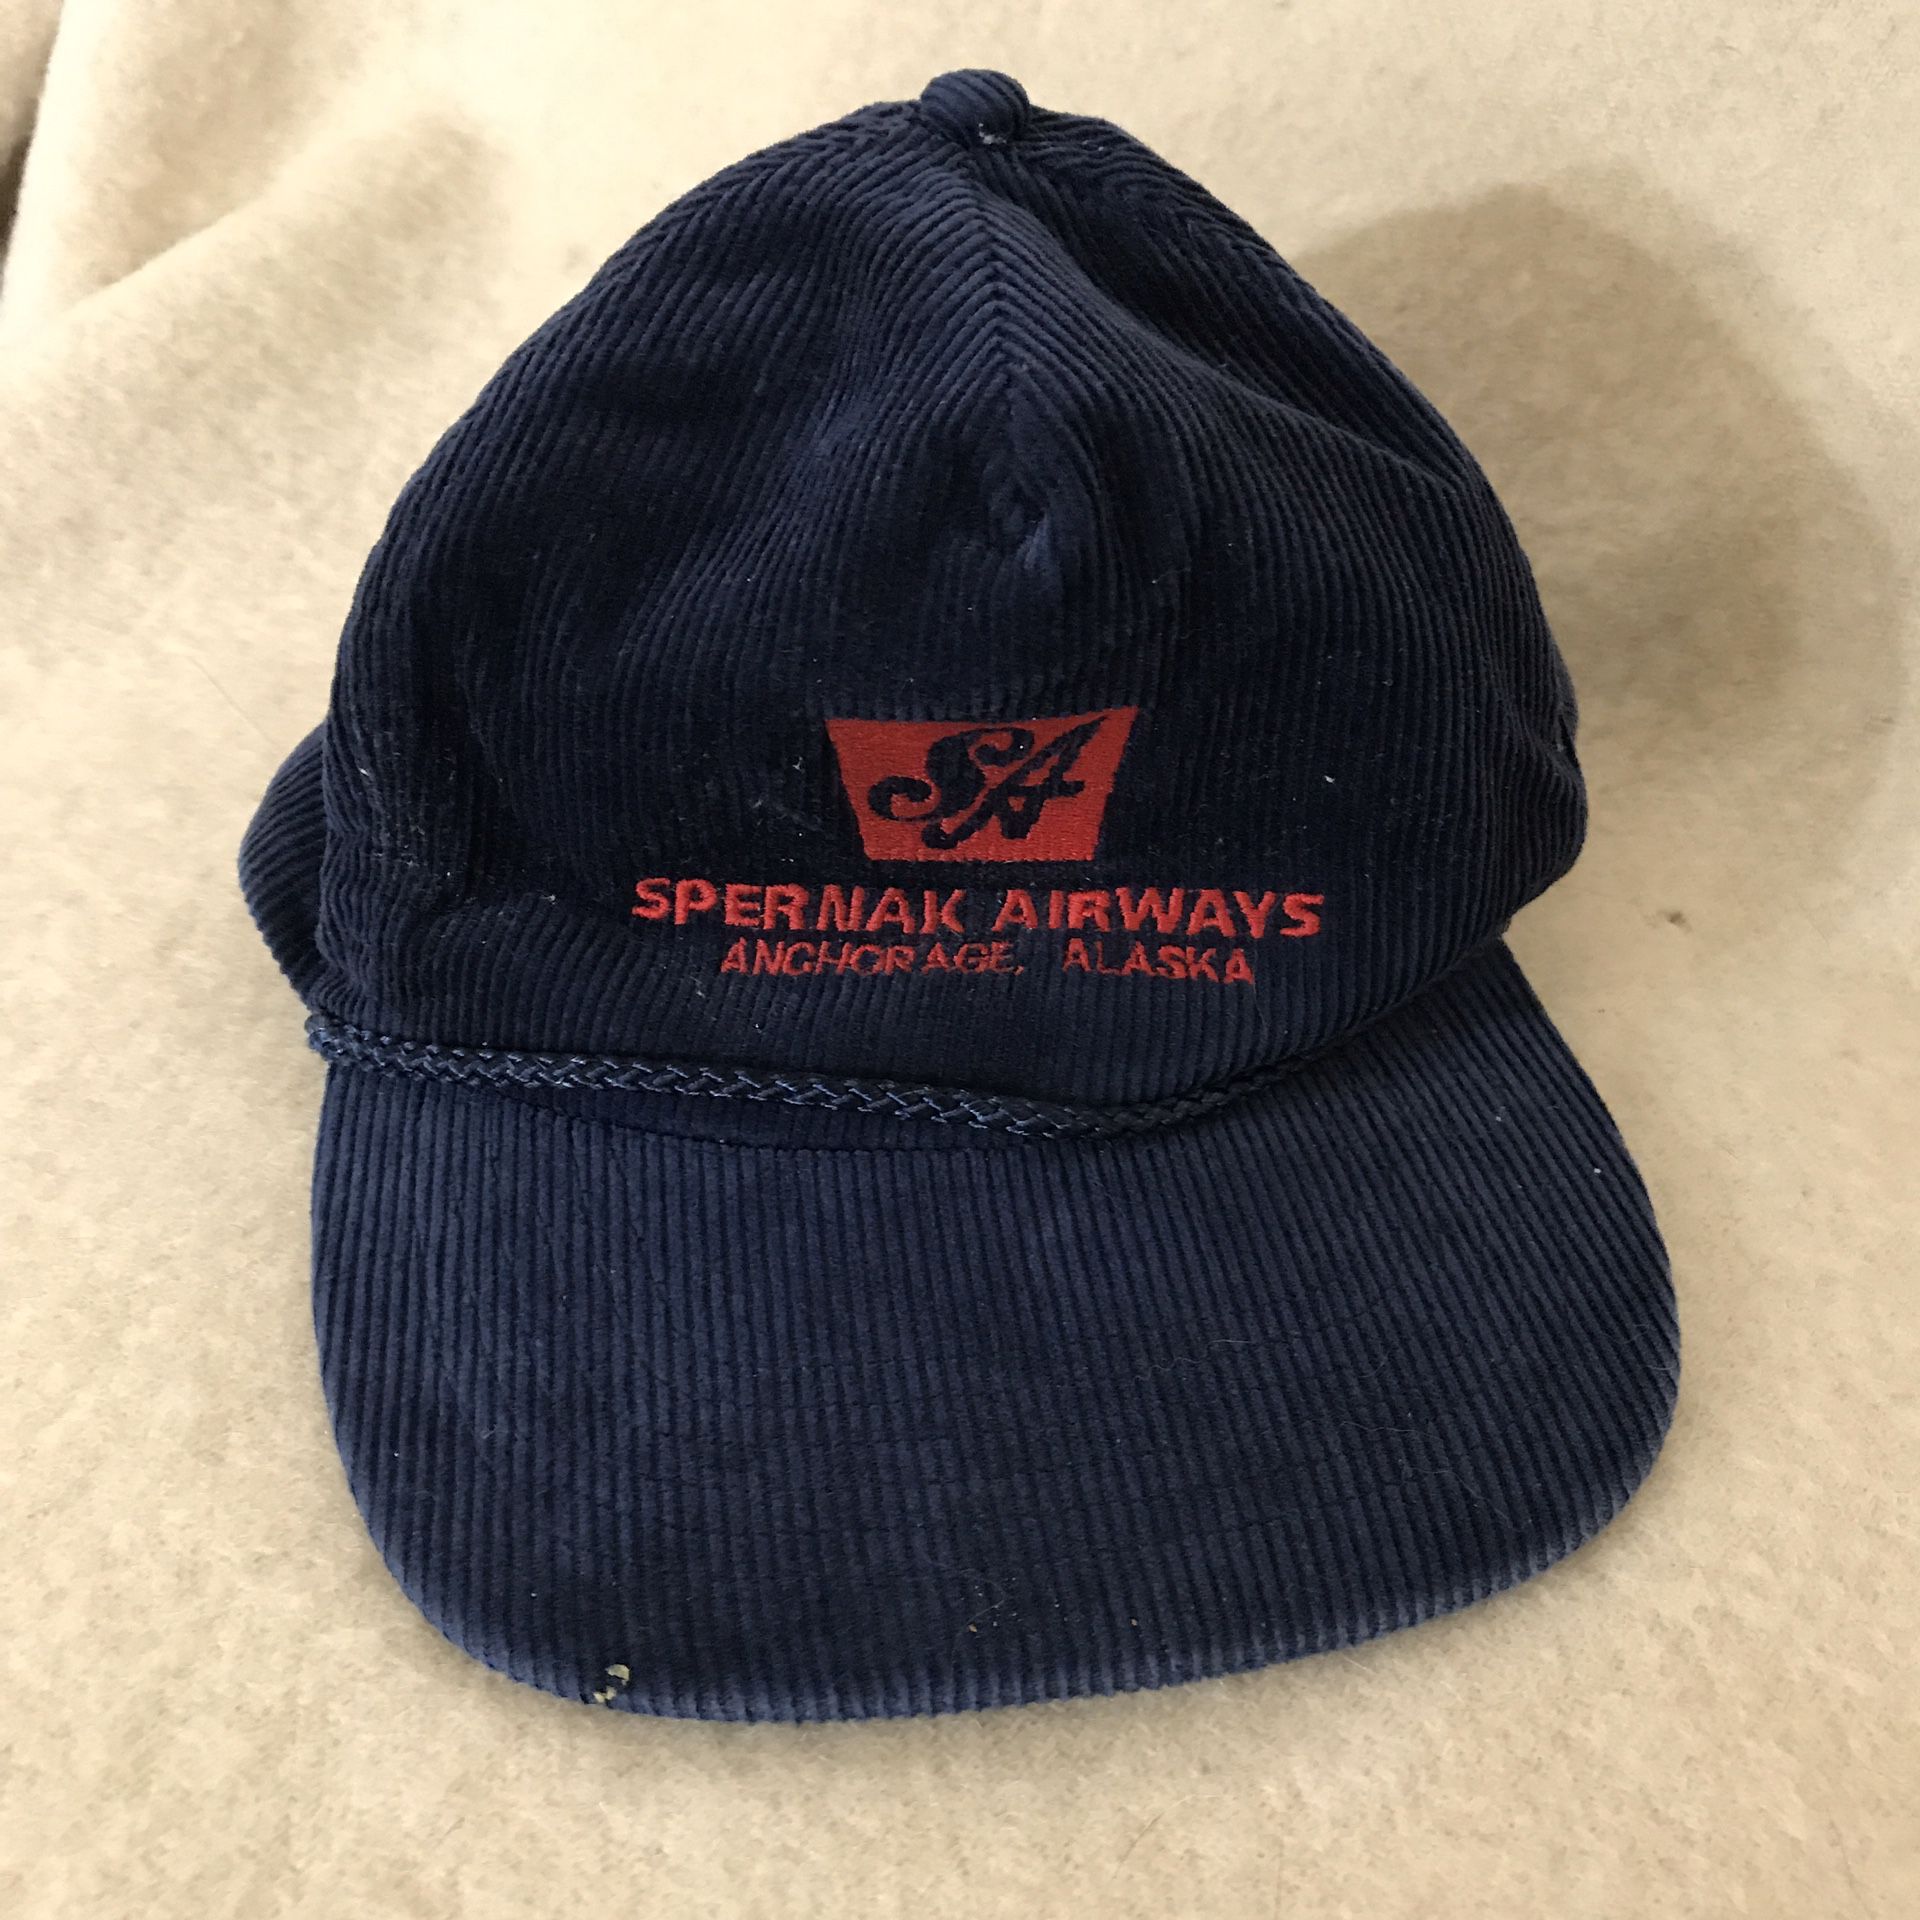 Vintage Spernak Airlines Alaska Corduroy Baseball Style Hat